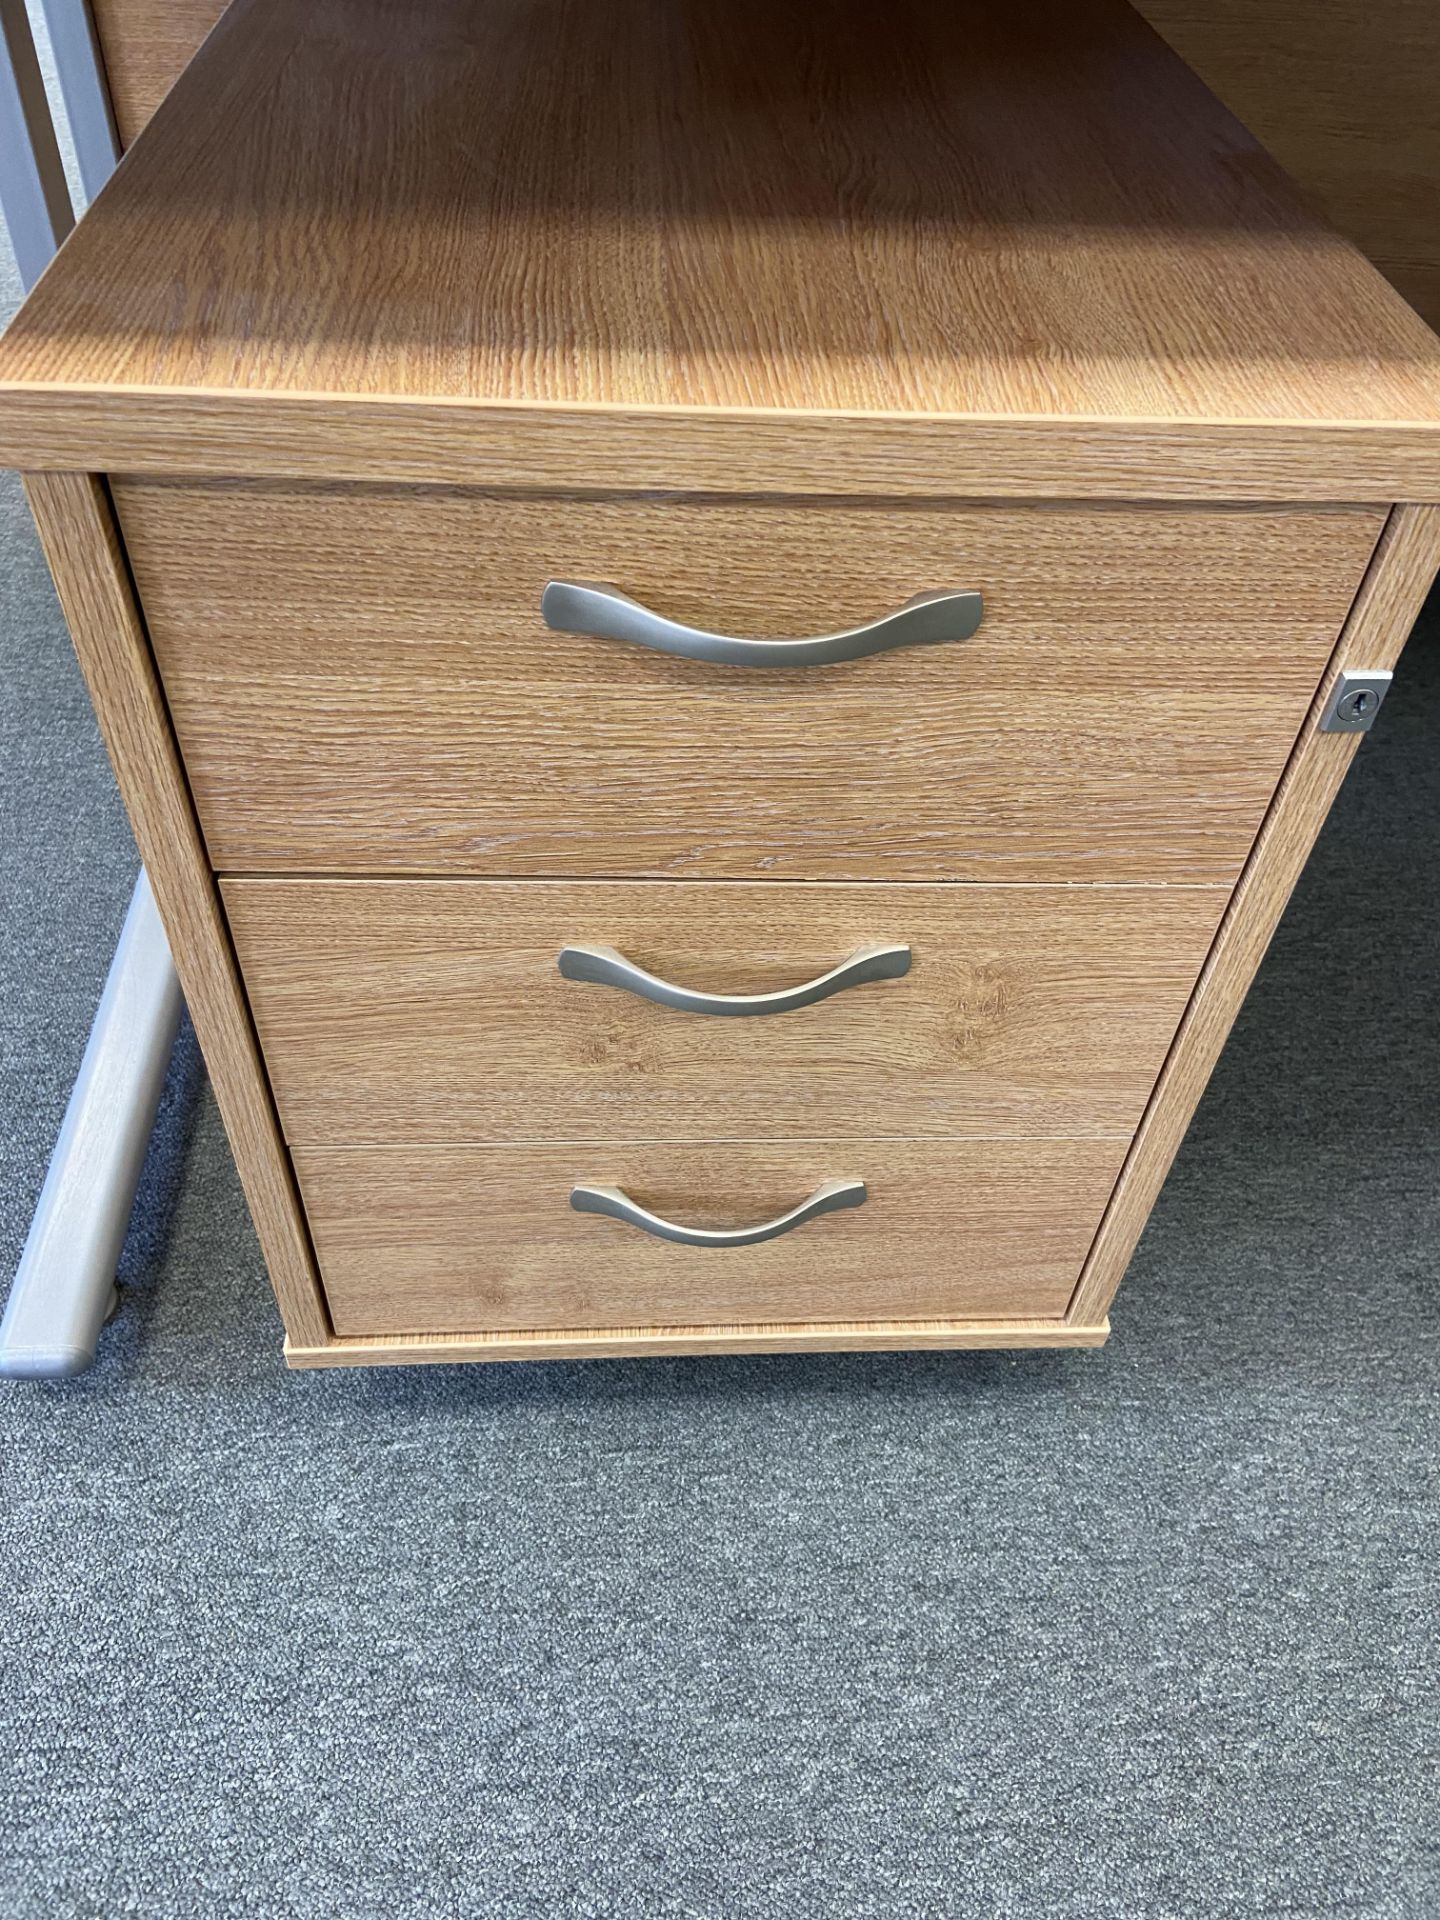 Lot comprisng: two rectangular desks & two 3 drawer mobile pedastals - Image 2 of 2